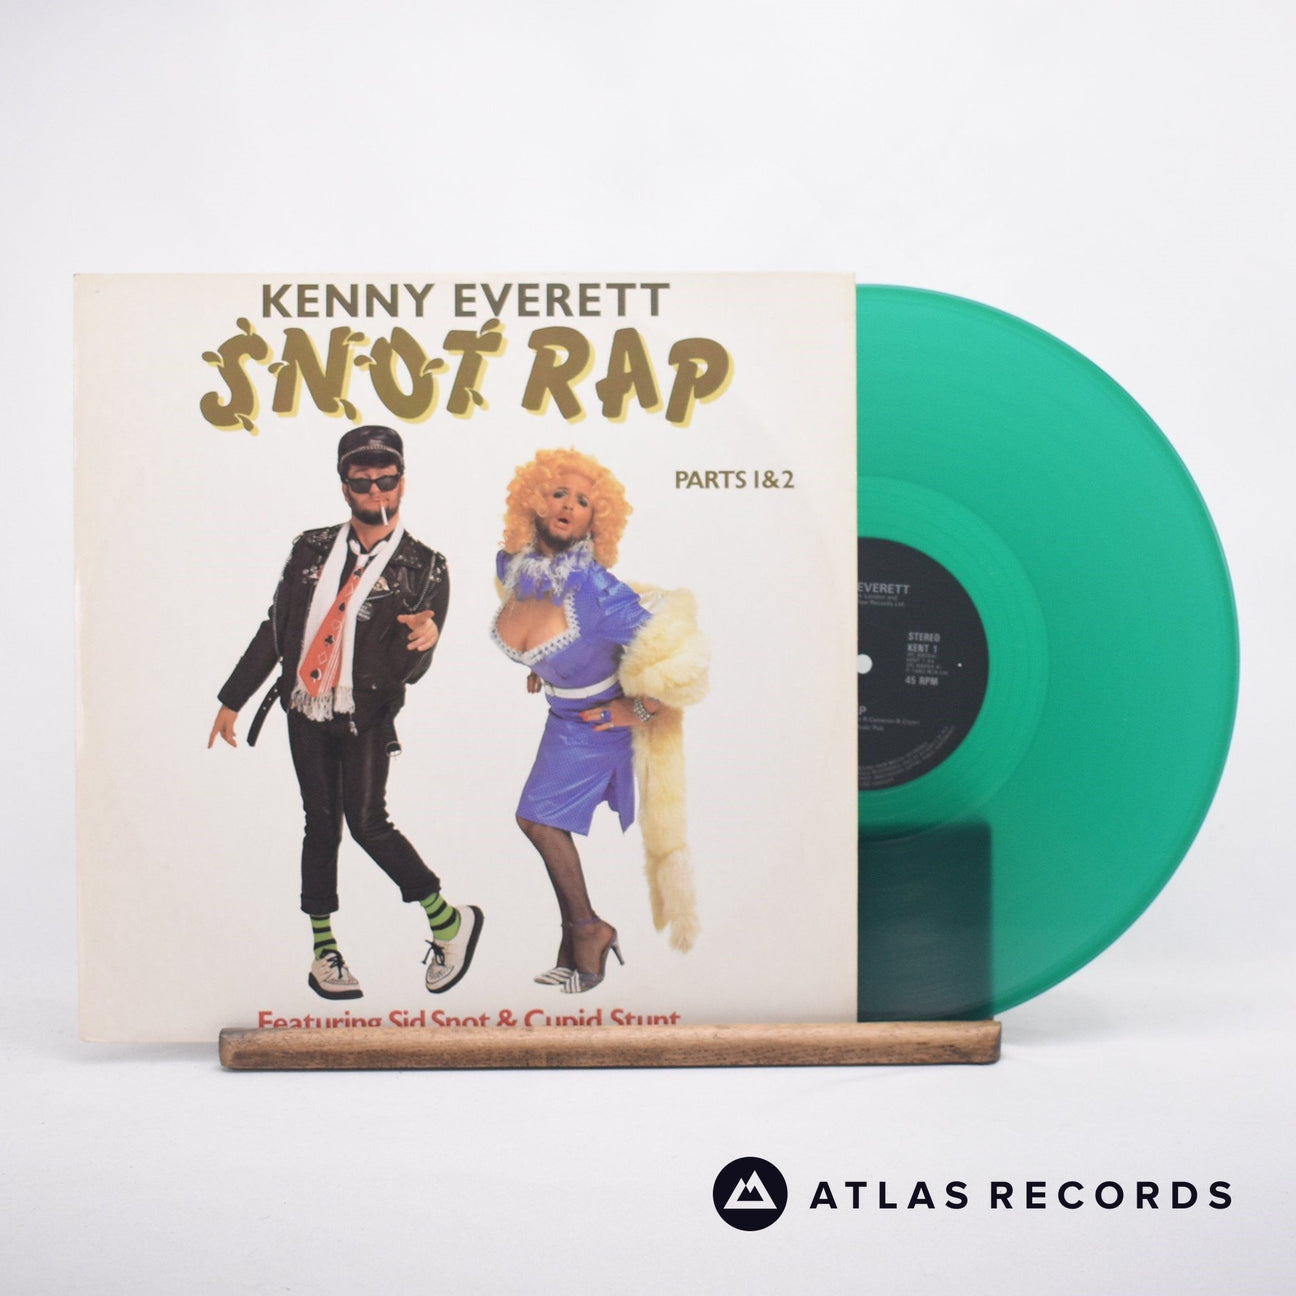 Kenny Everett Snot Rap 12" Vinyl Record - Front Cover & Record